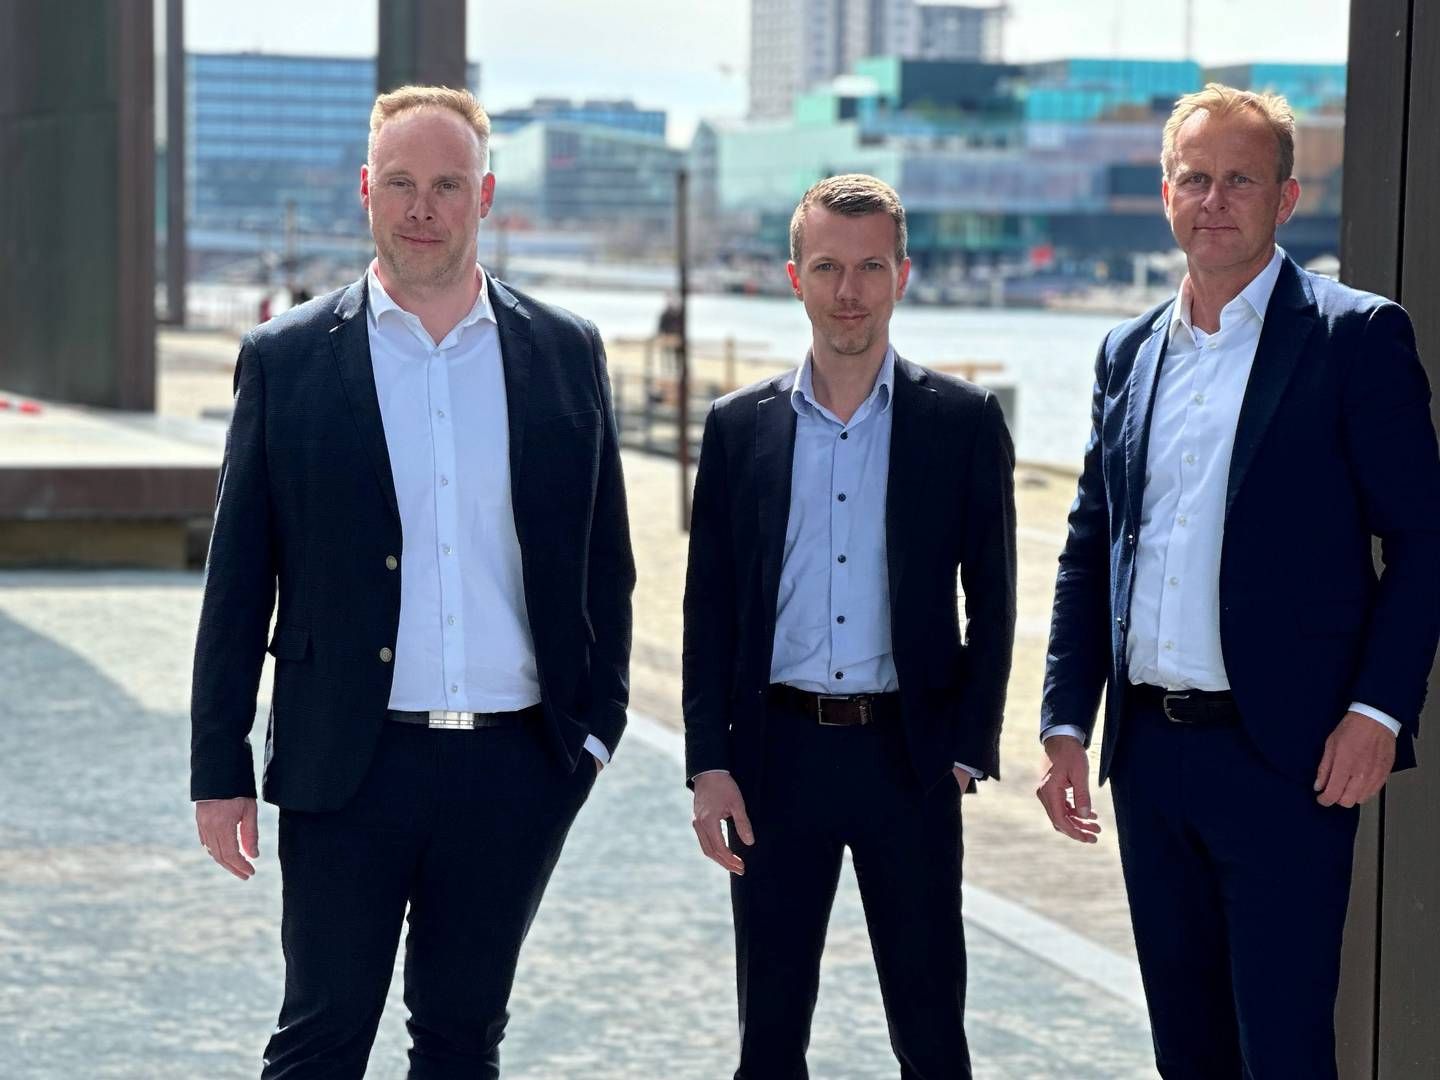 Fra venstre: Lars Dahl Allerup, partner i Human Bytes, Thomas Koefoed, partner i Netcompany, Ulrik Juul Therkildsen, CEO og partner i Human Bytes | Foto: Human Bytes / Pr